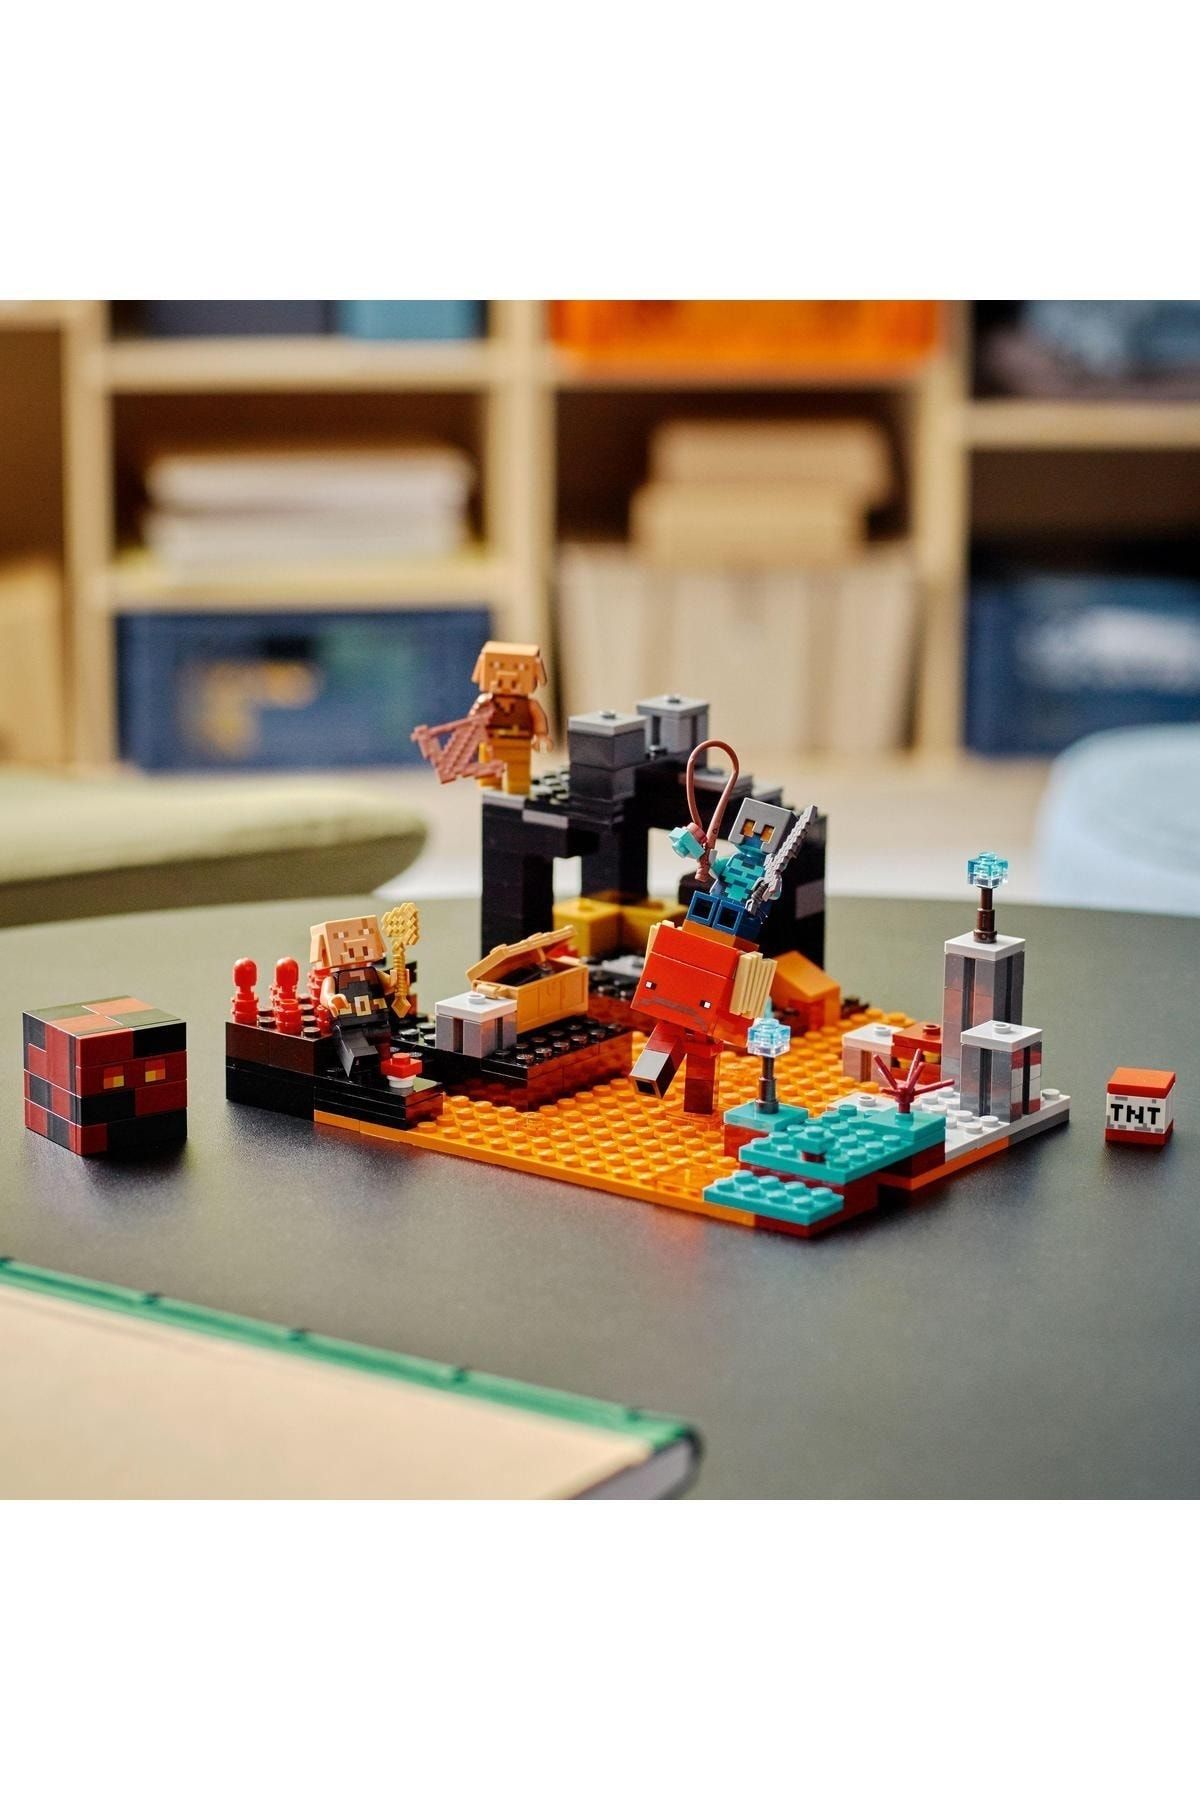 LEGO Mineccraft - 21185 - The Nether Bastion